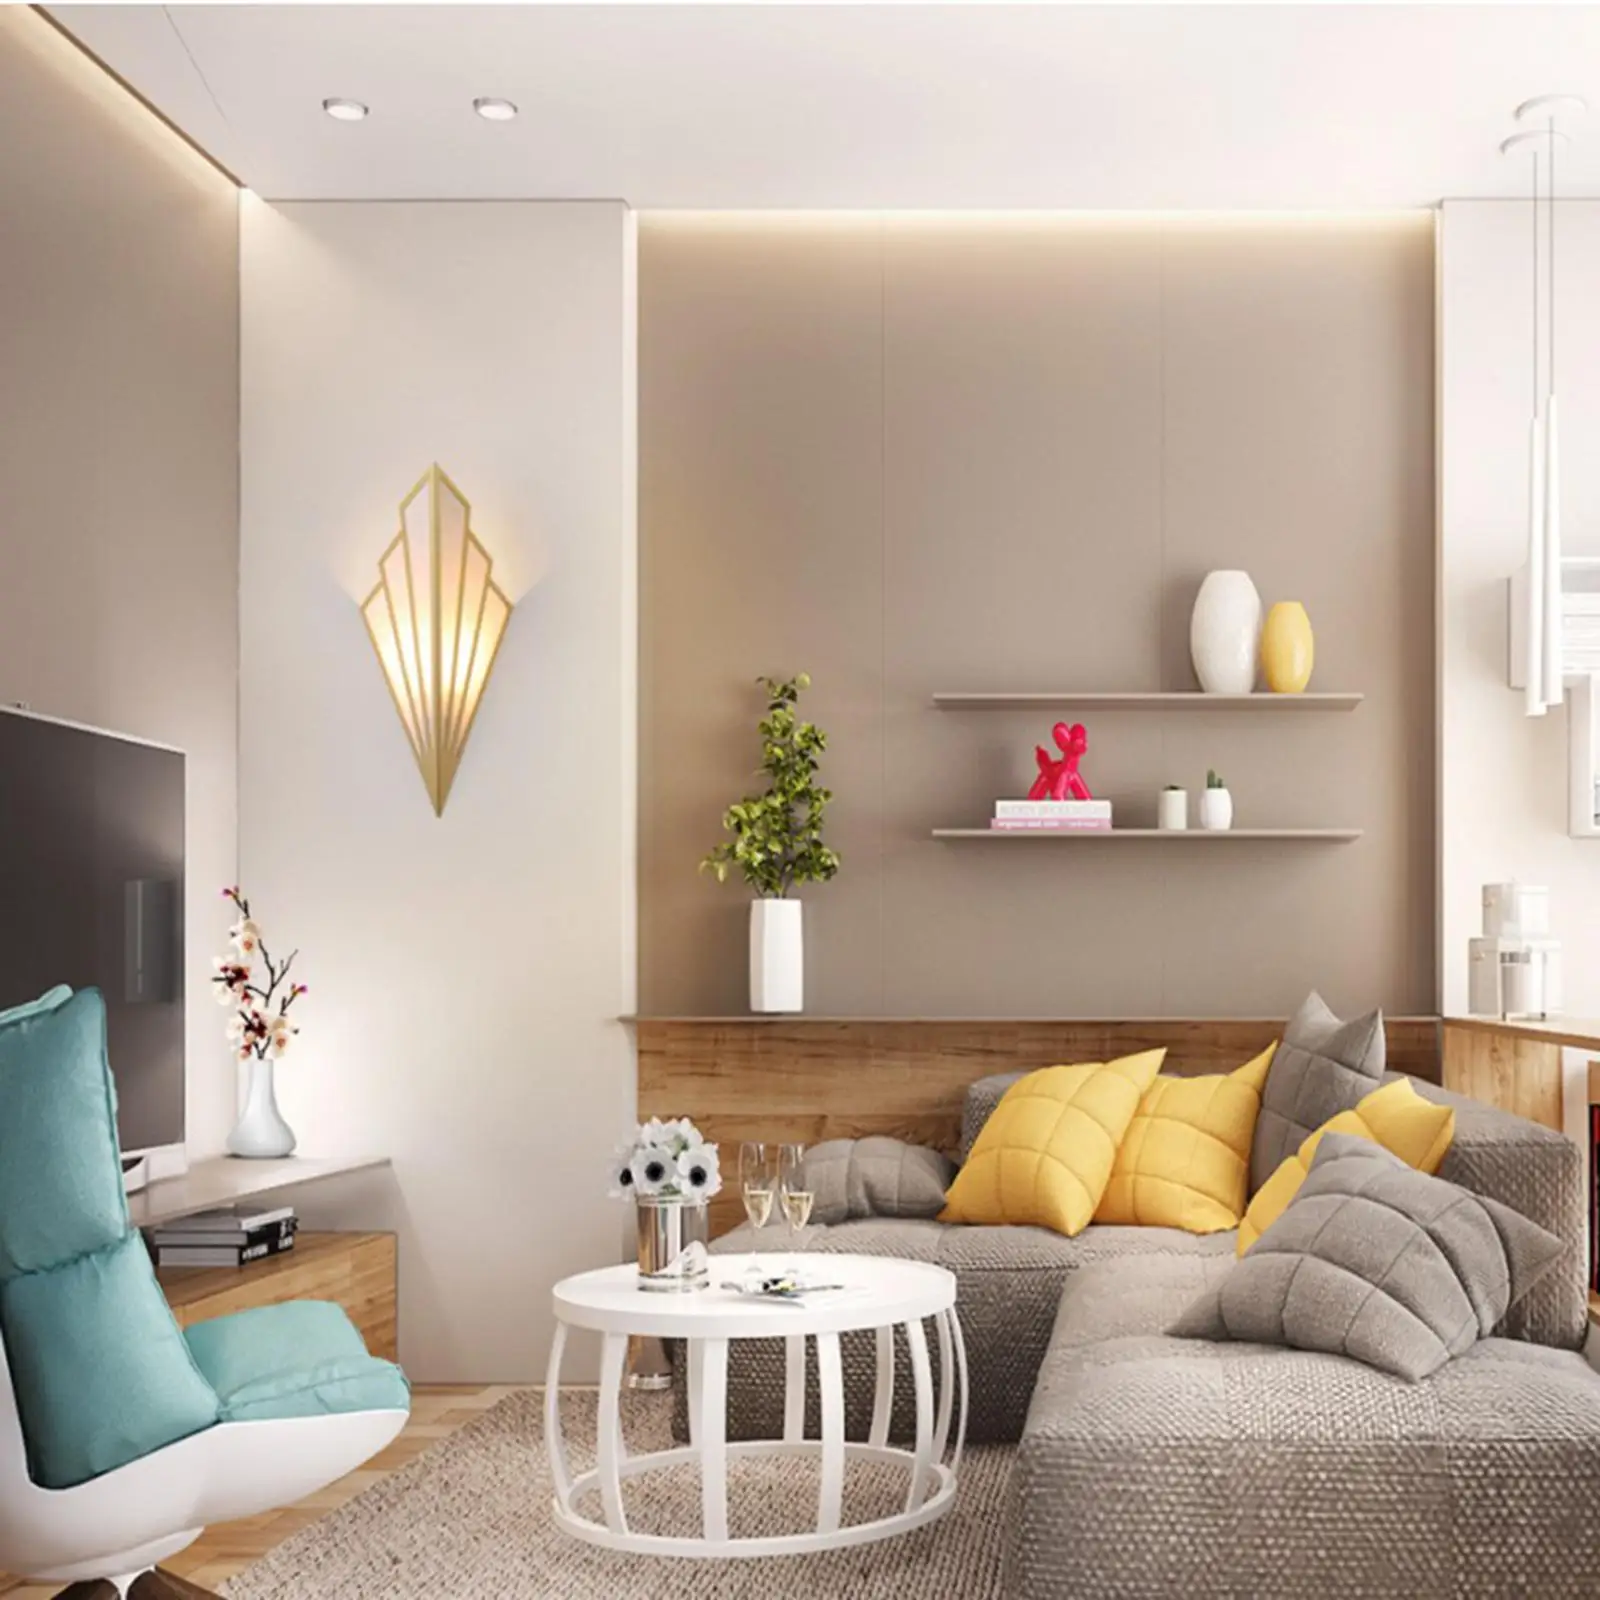  Light Bedside Sconce, LED Lamp Fixture,for Bedrooms Decor,Dining room,Living room, Study room,Gift